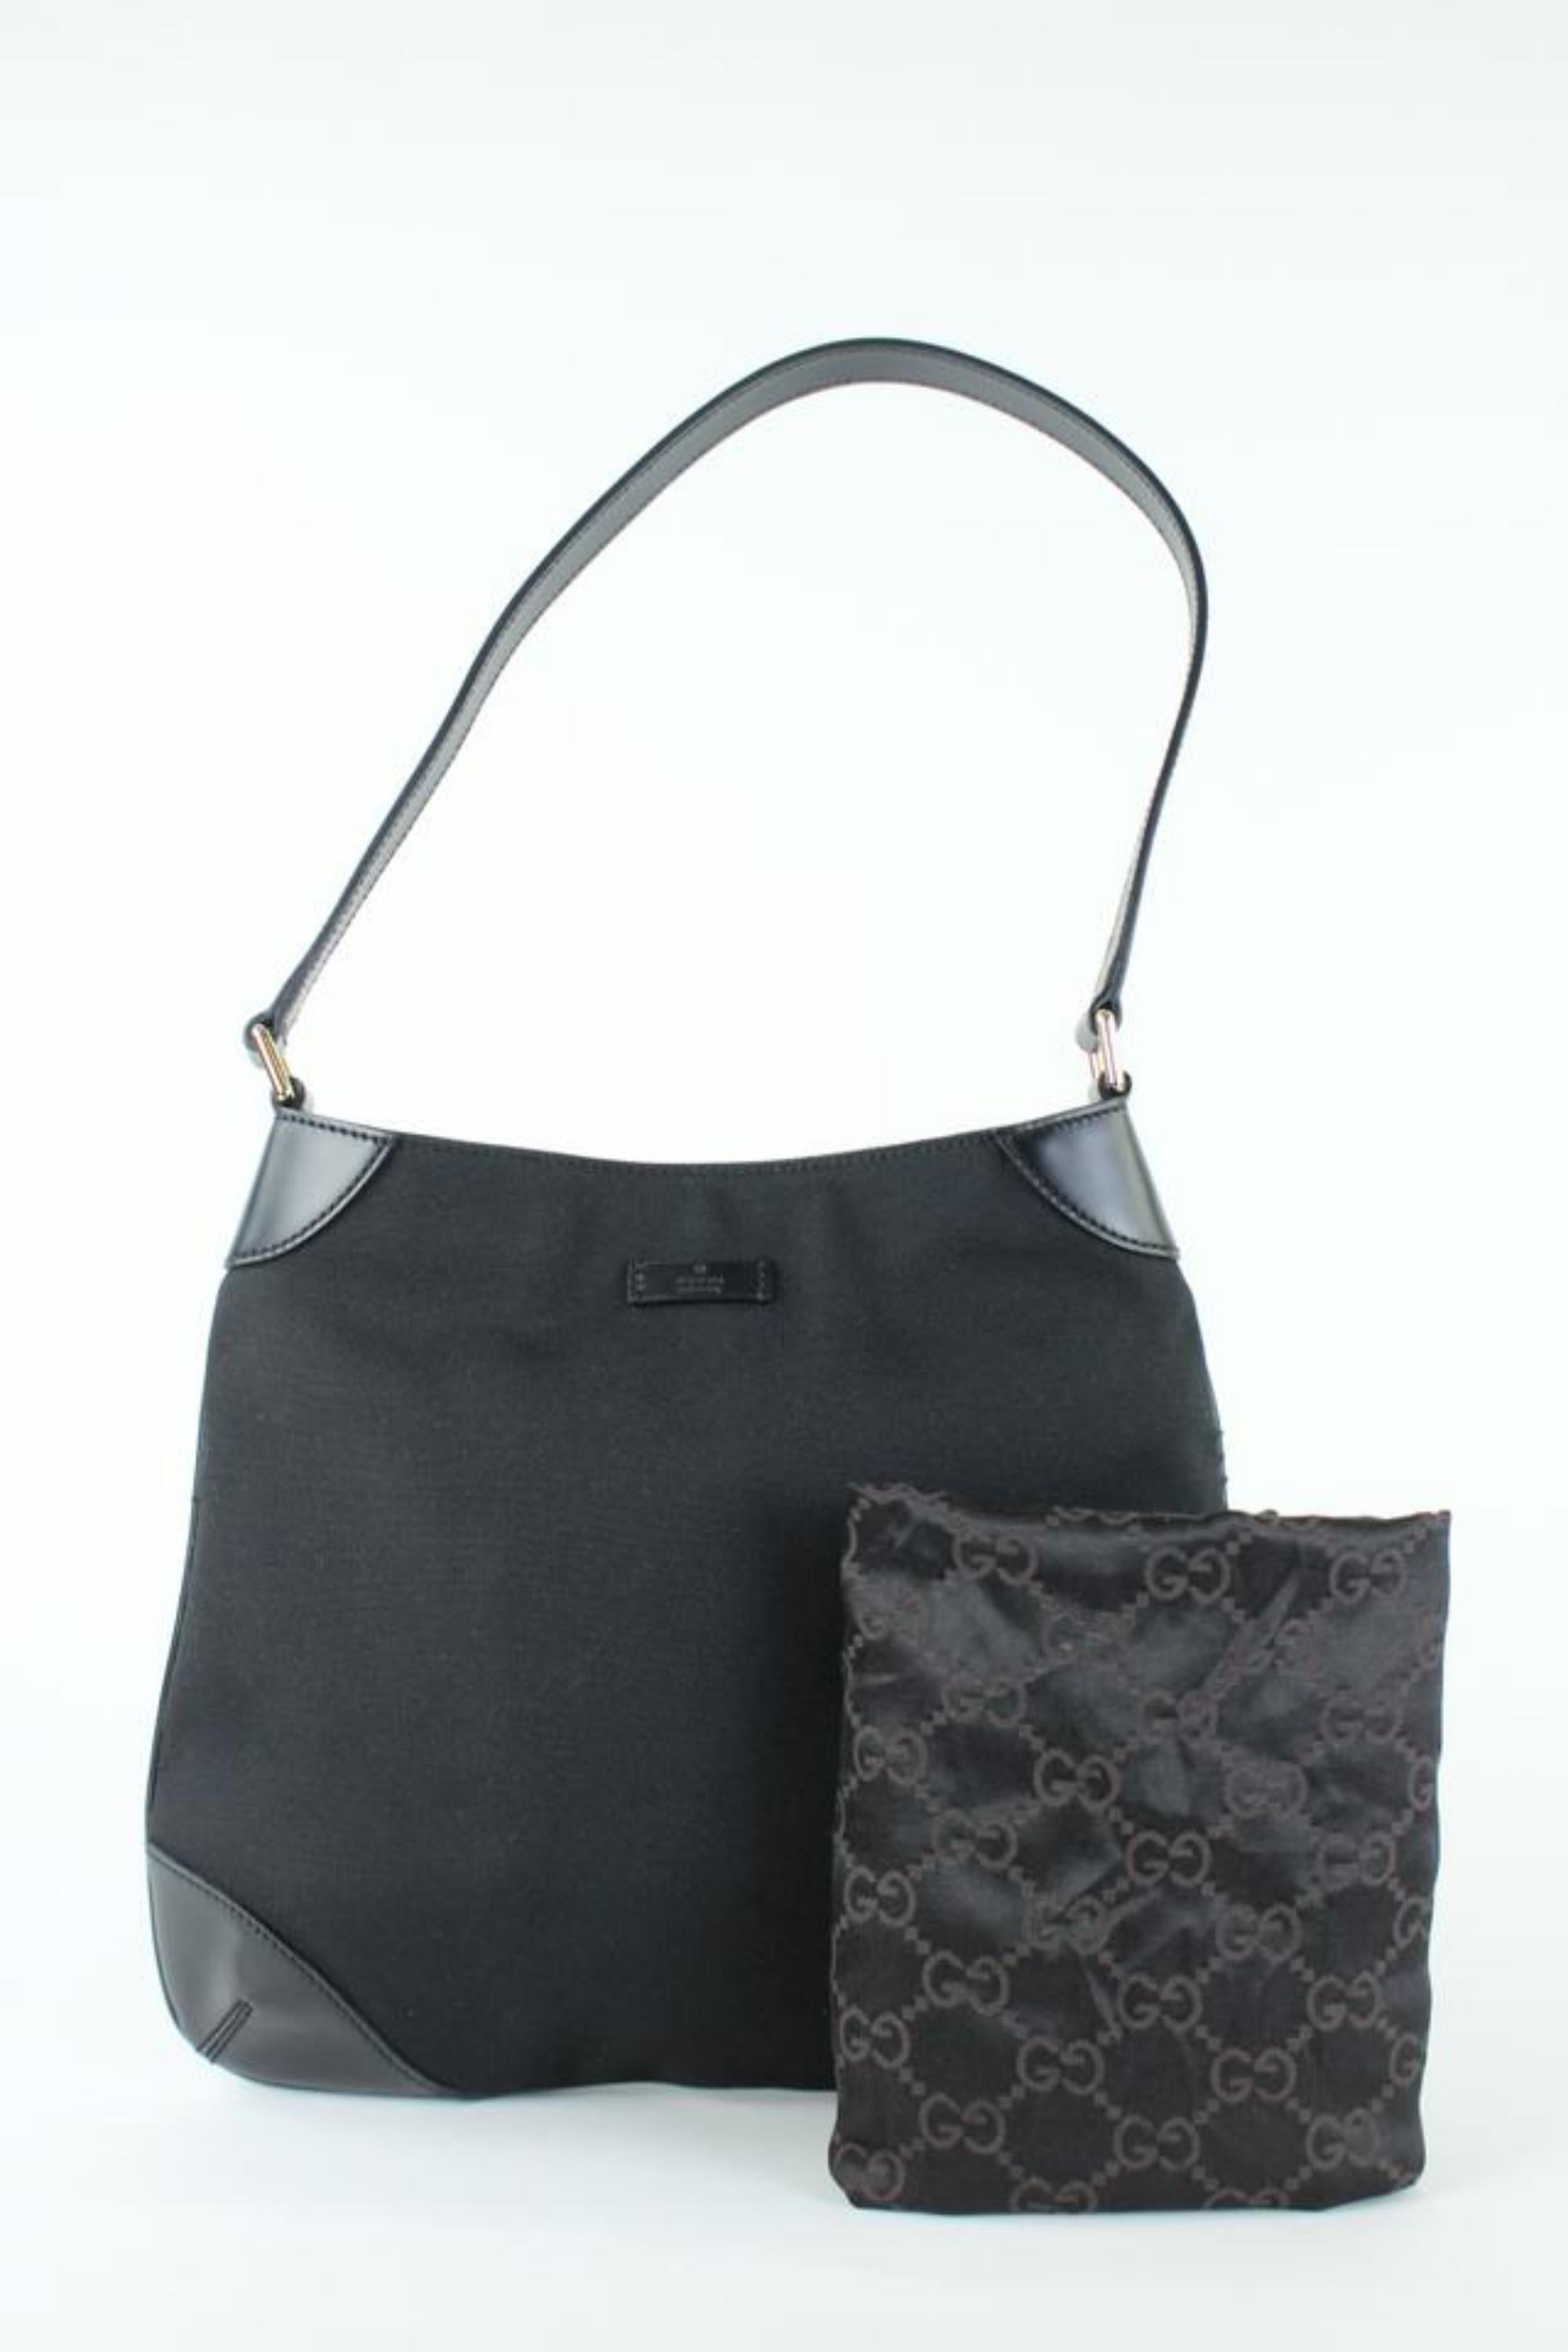 Gucci Leather Trim Medium 817gt2 Black Canvas Hobo Bag For Sale 6